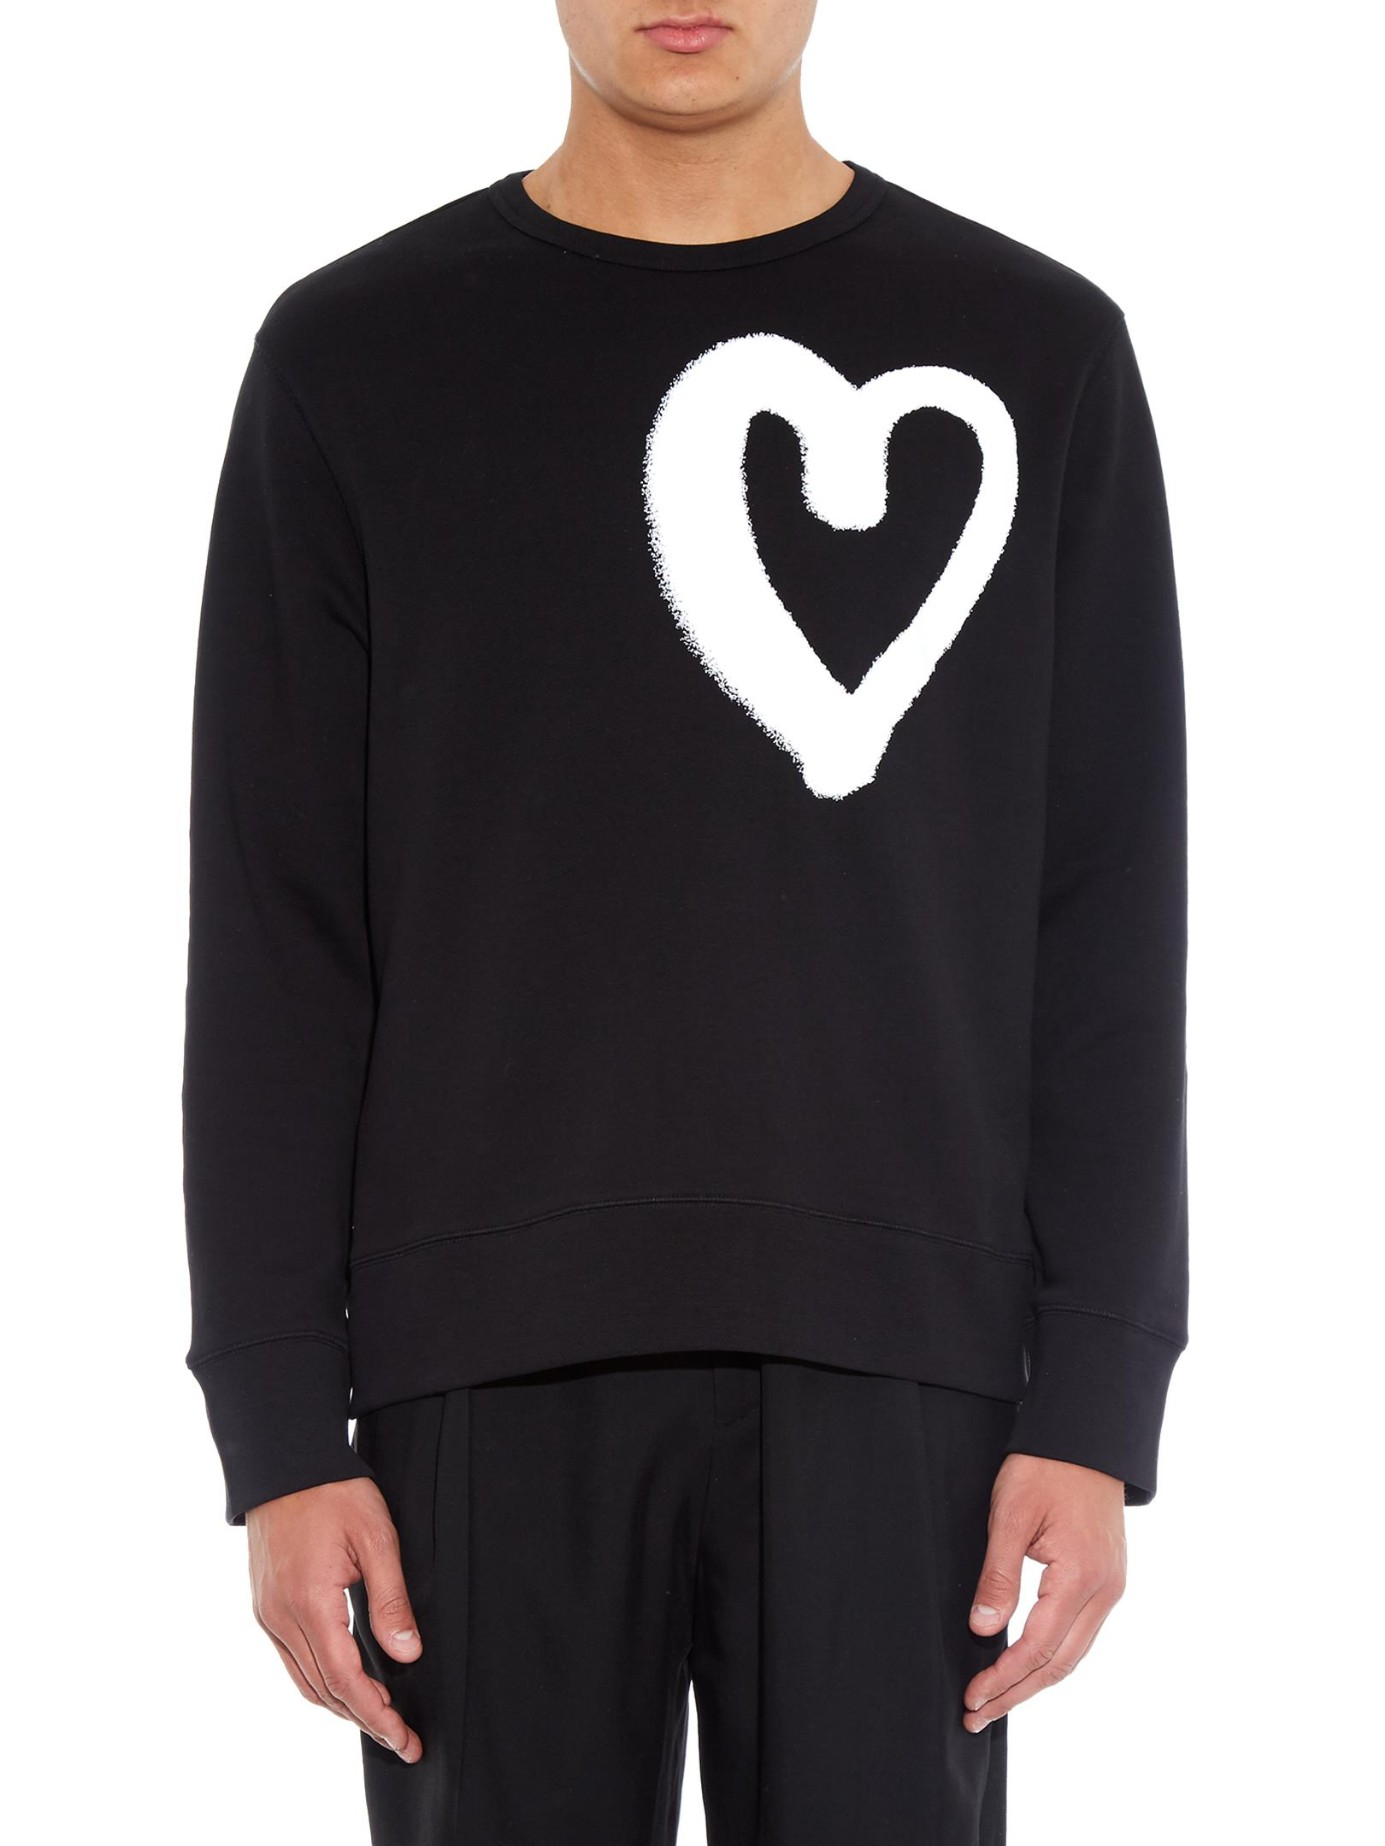 Acne Studios 'campus' Heart Print Sweatshirt in Black for Men